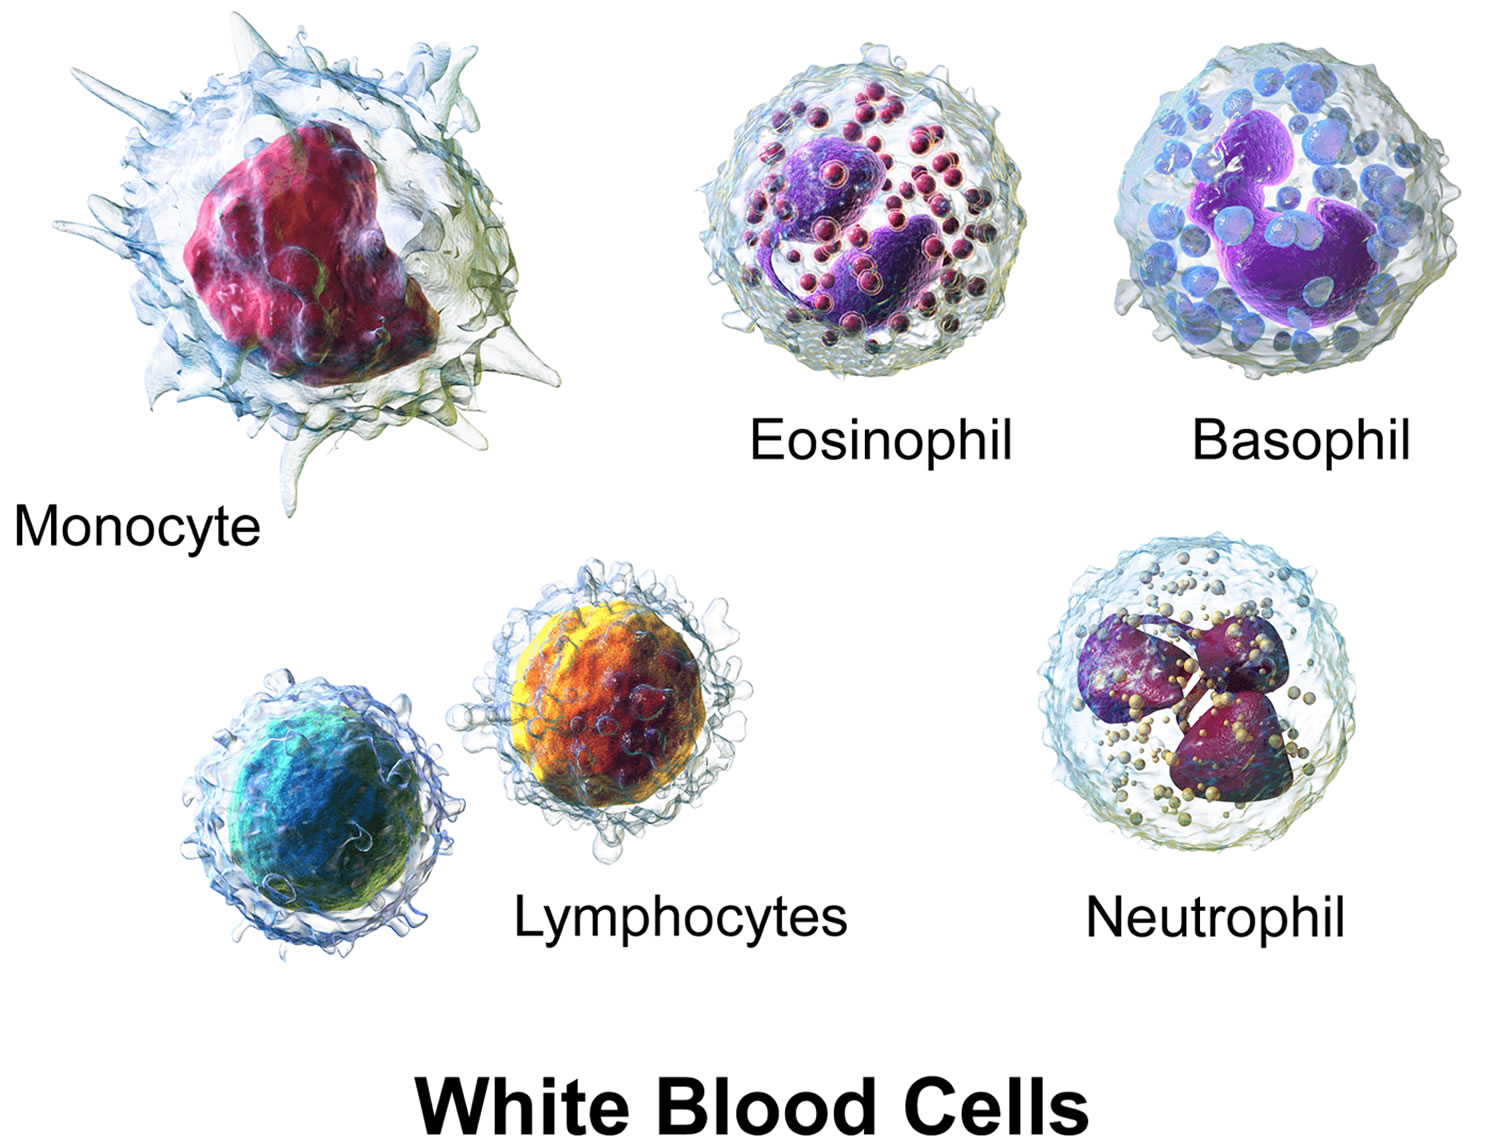 white blood cells